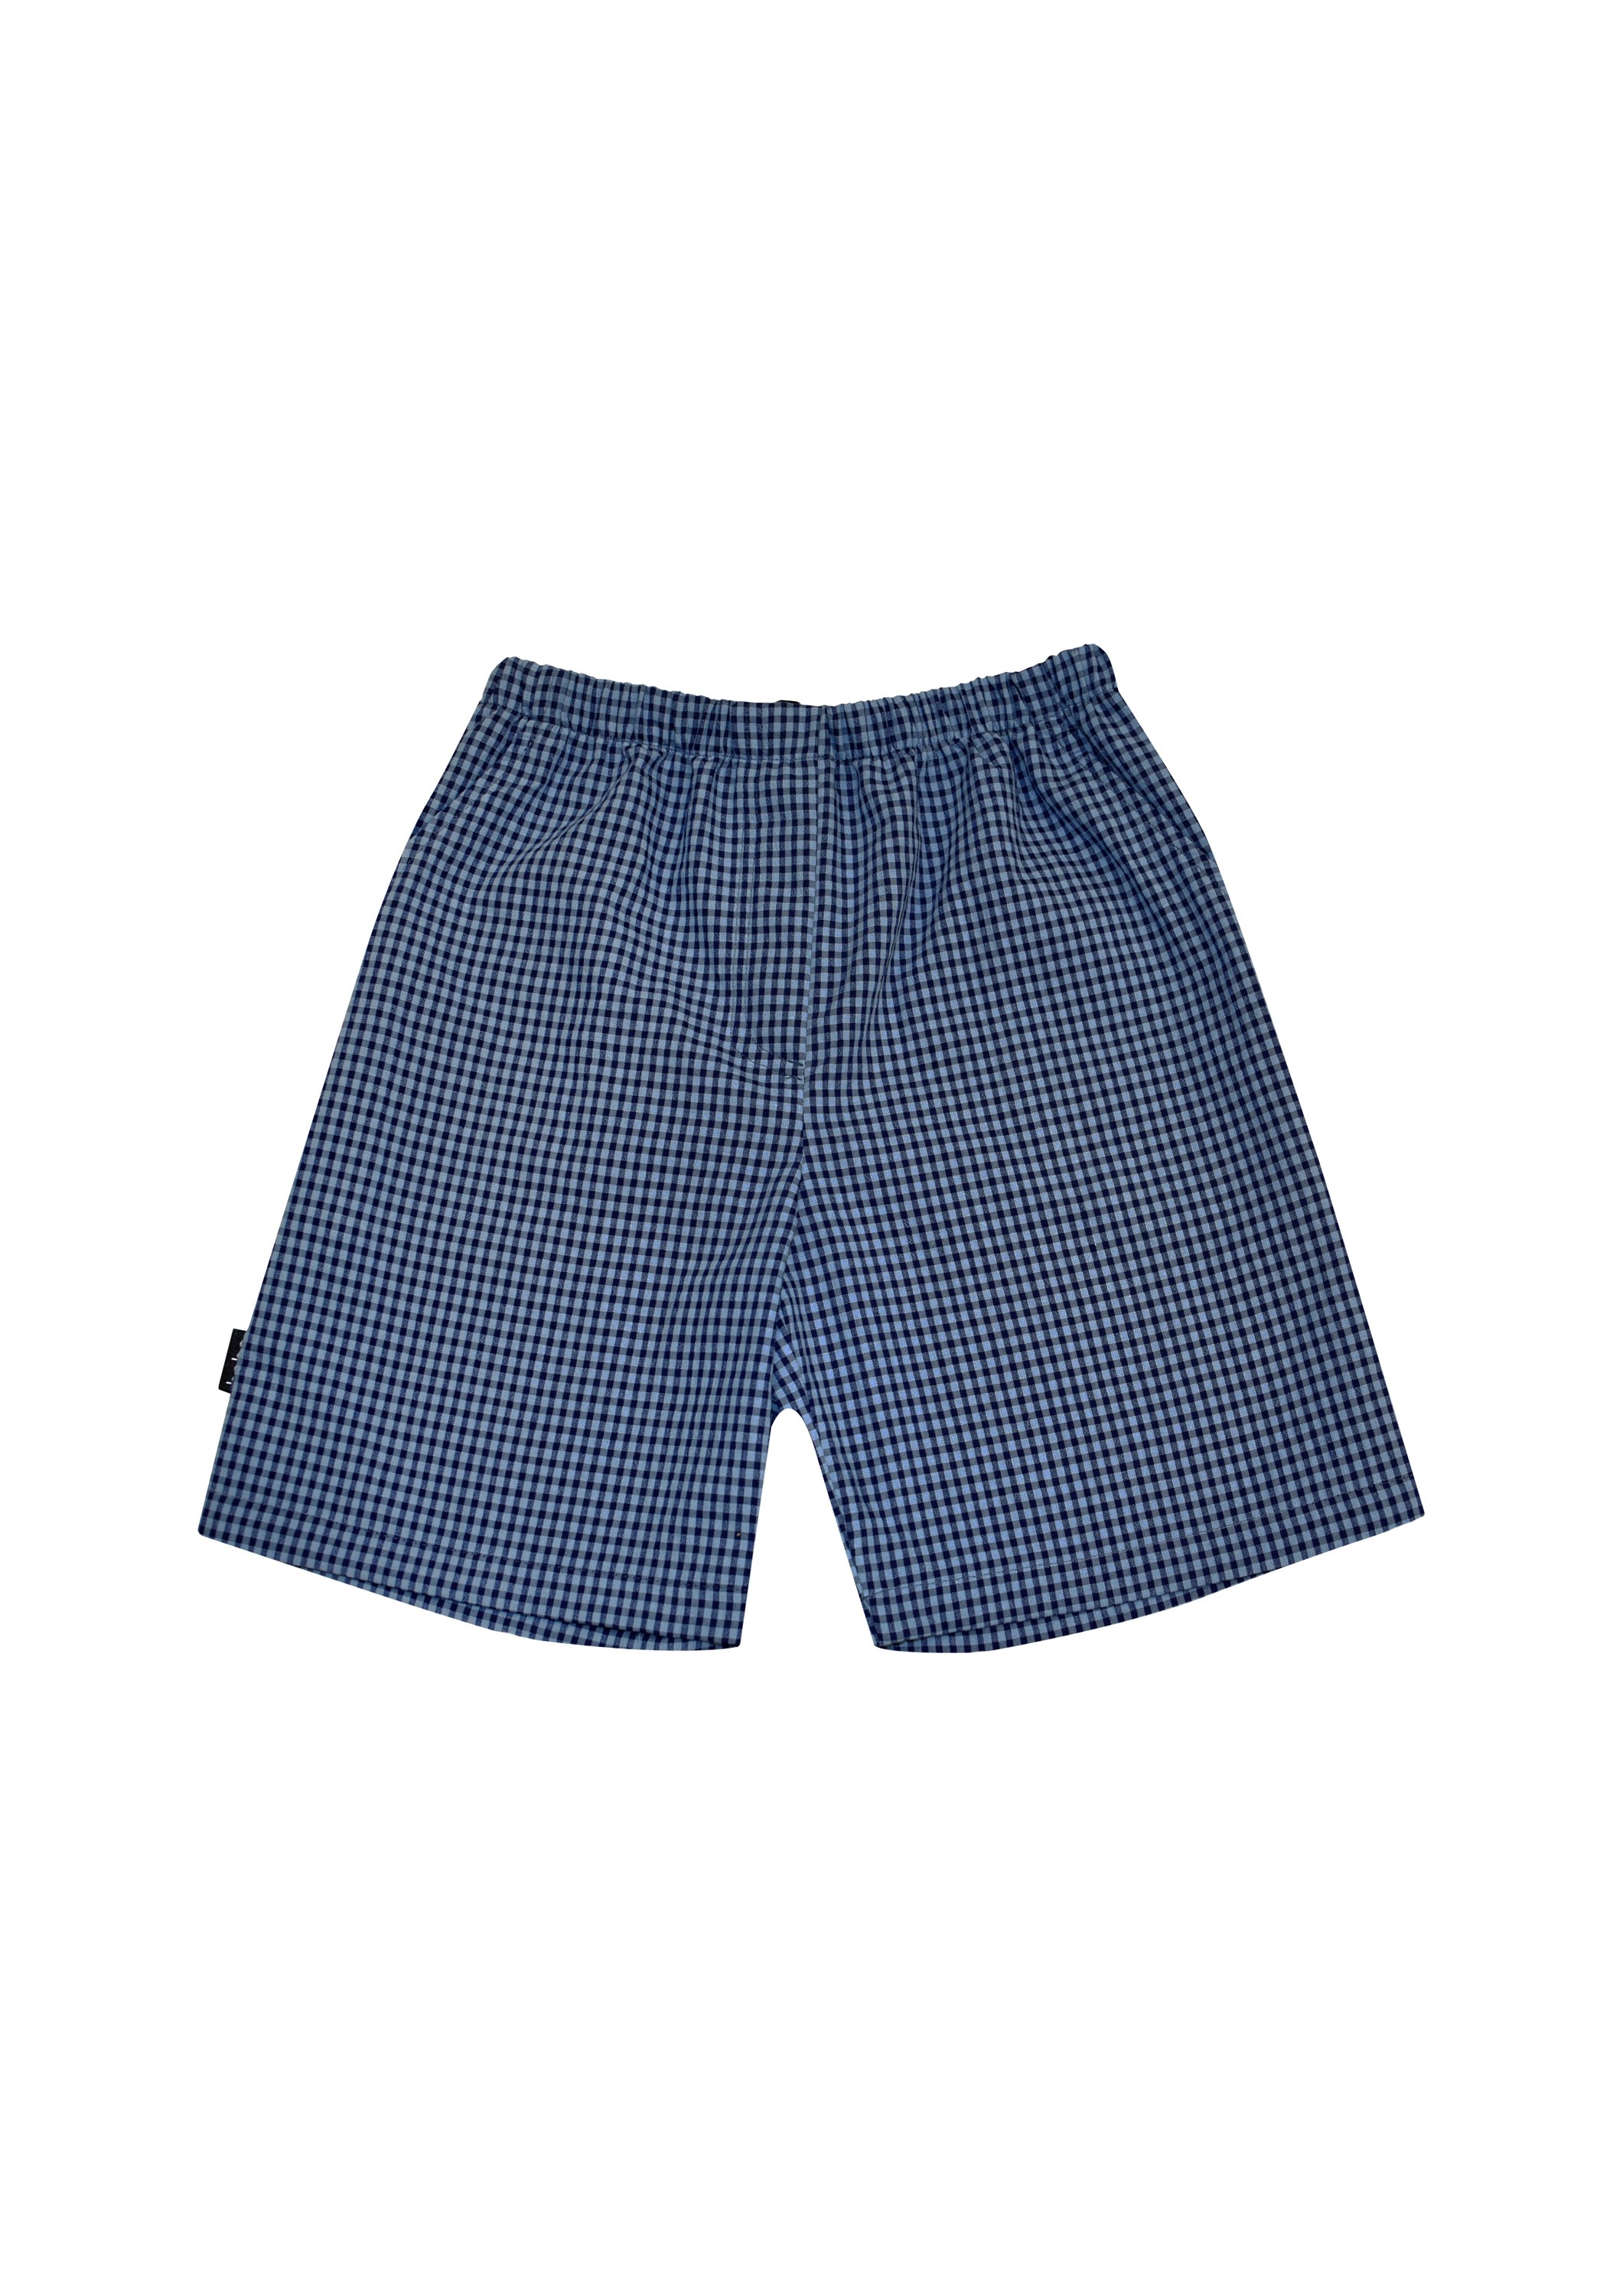 Shorts blue checkered, for boys | HEBE